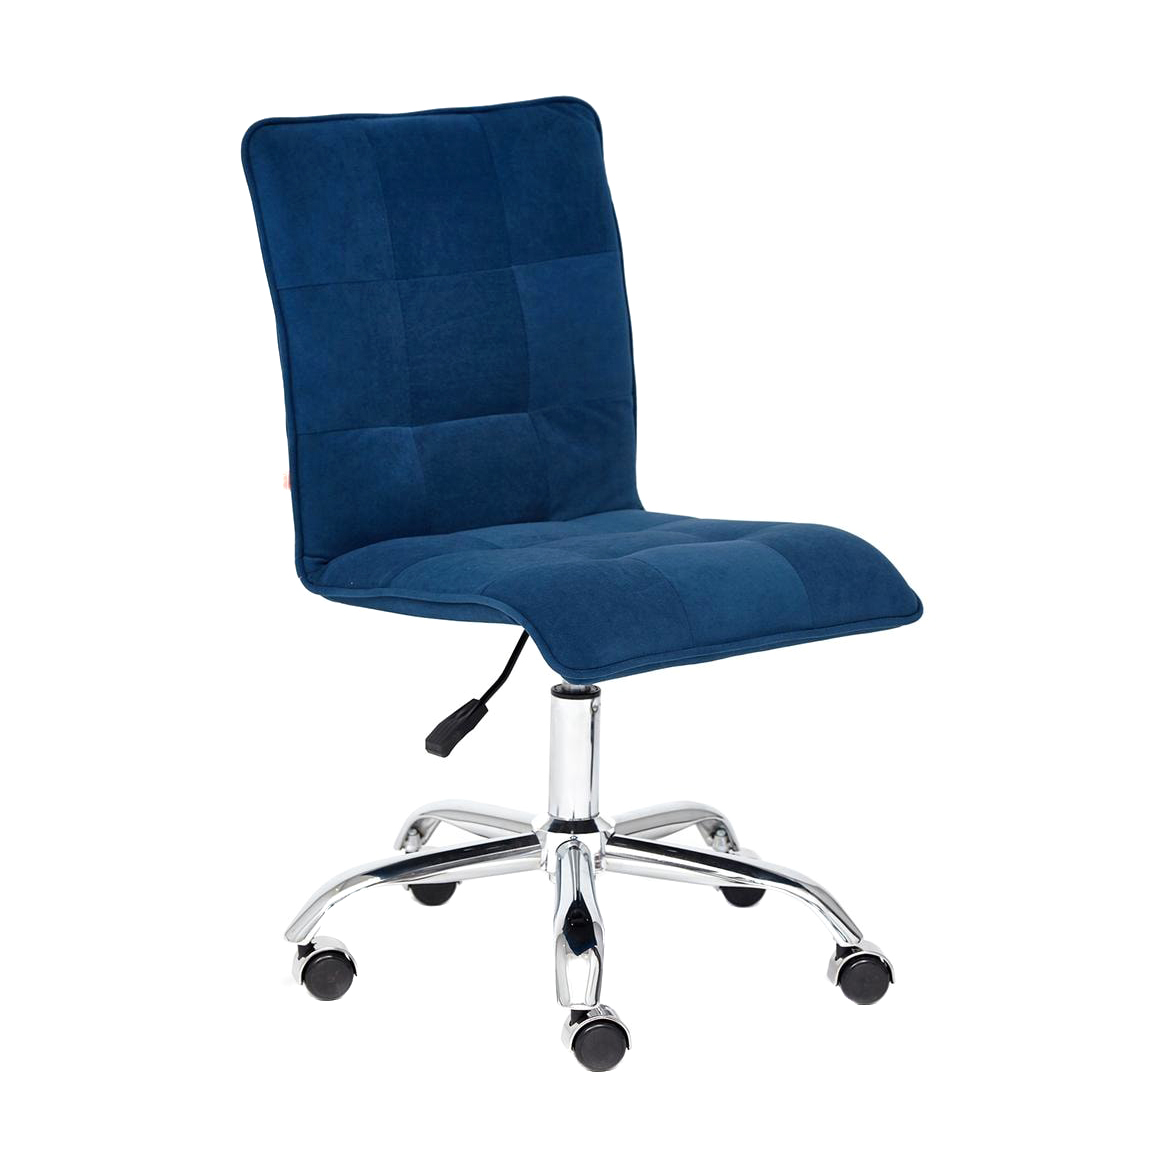 Кресло офисное TC до 100 кг 96х45х40 см синий кресло офисное tc до 100 кг 96х45х40 см синий